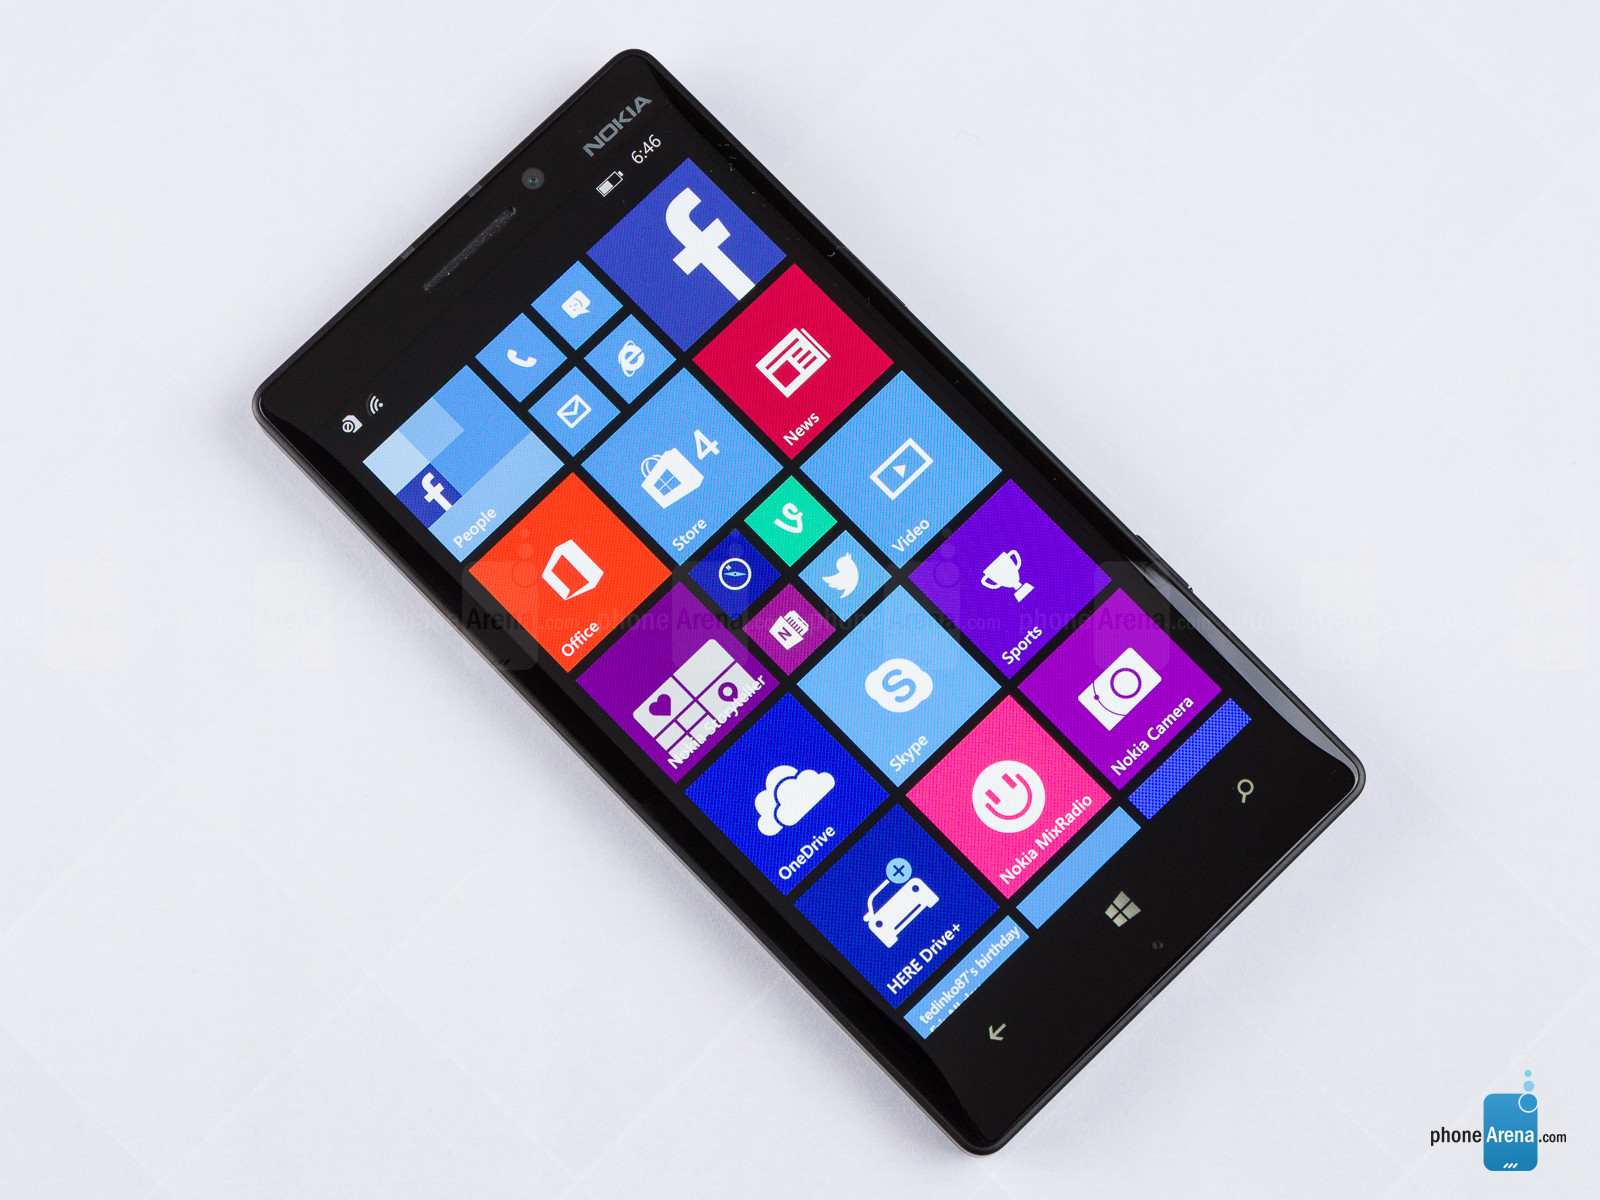 Nokia Lumia Backgrounds, Compatible - PC, Mobile, Gadgets| 1600x1200 px